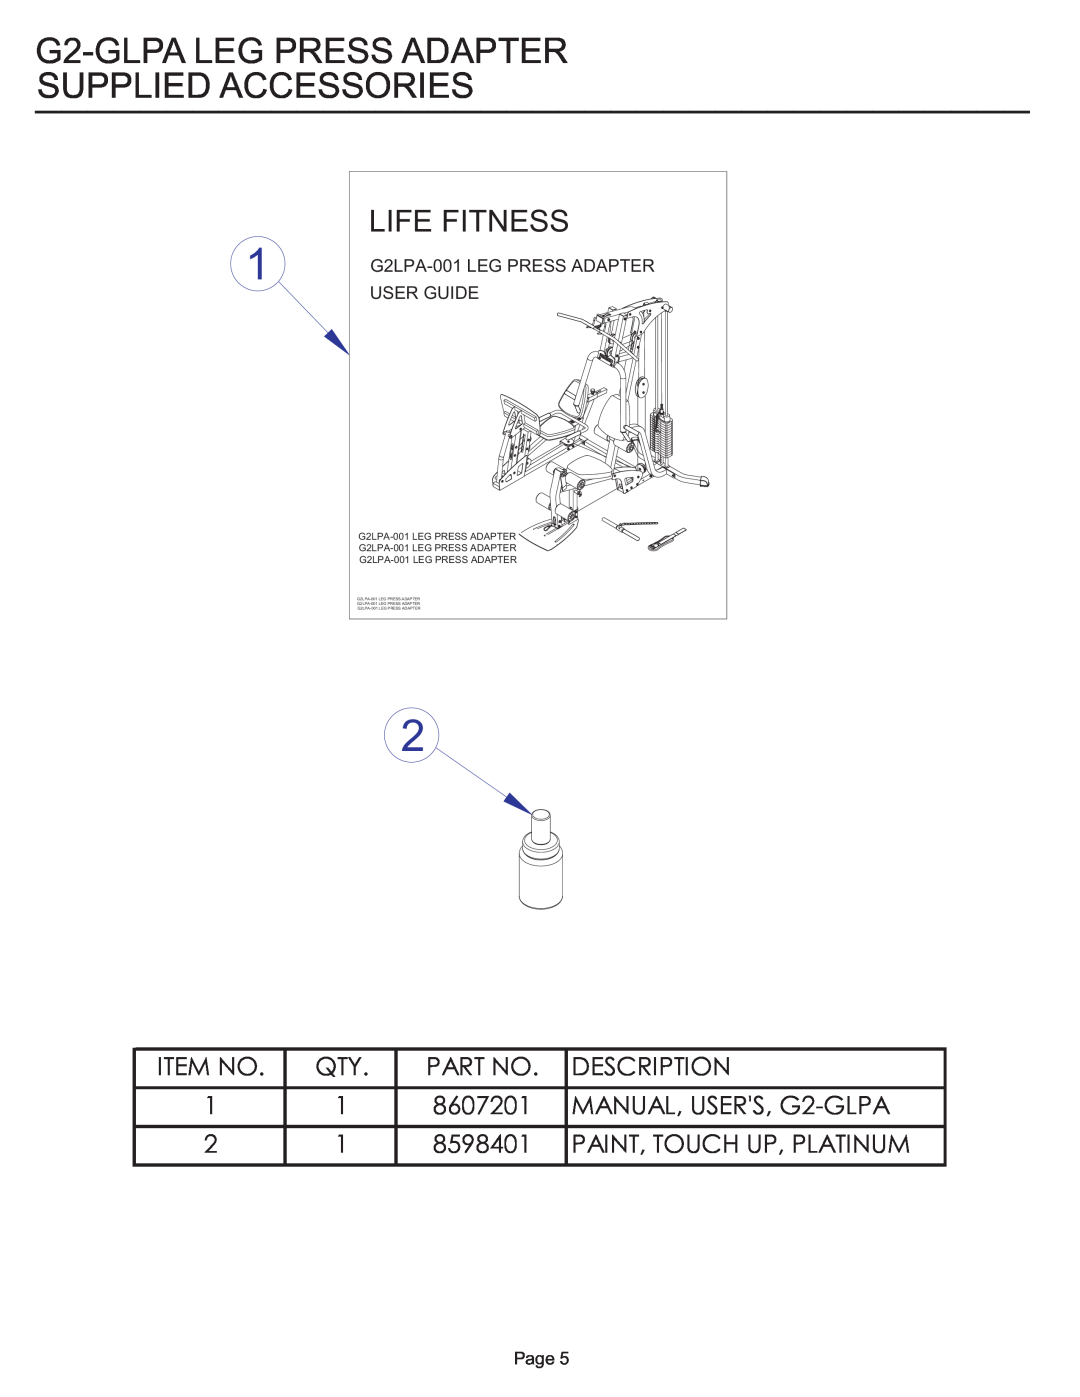 Life Fitness G2-GLPA-001 G2-GLPA LEG PRESS ADAPTER SUPPLIED ACCESSORIES, Life Fitness, Item No, Description, User Guide 